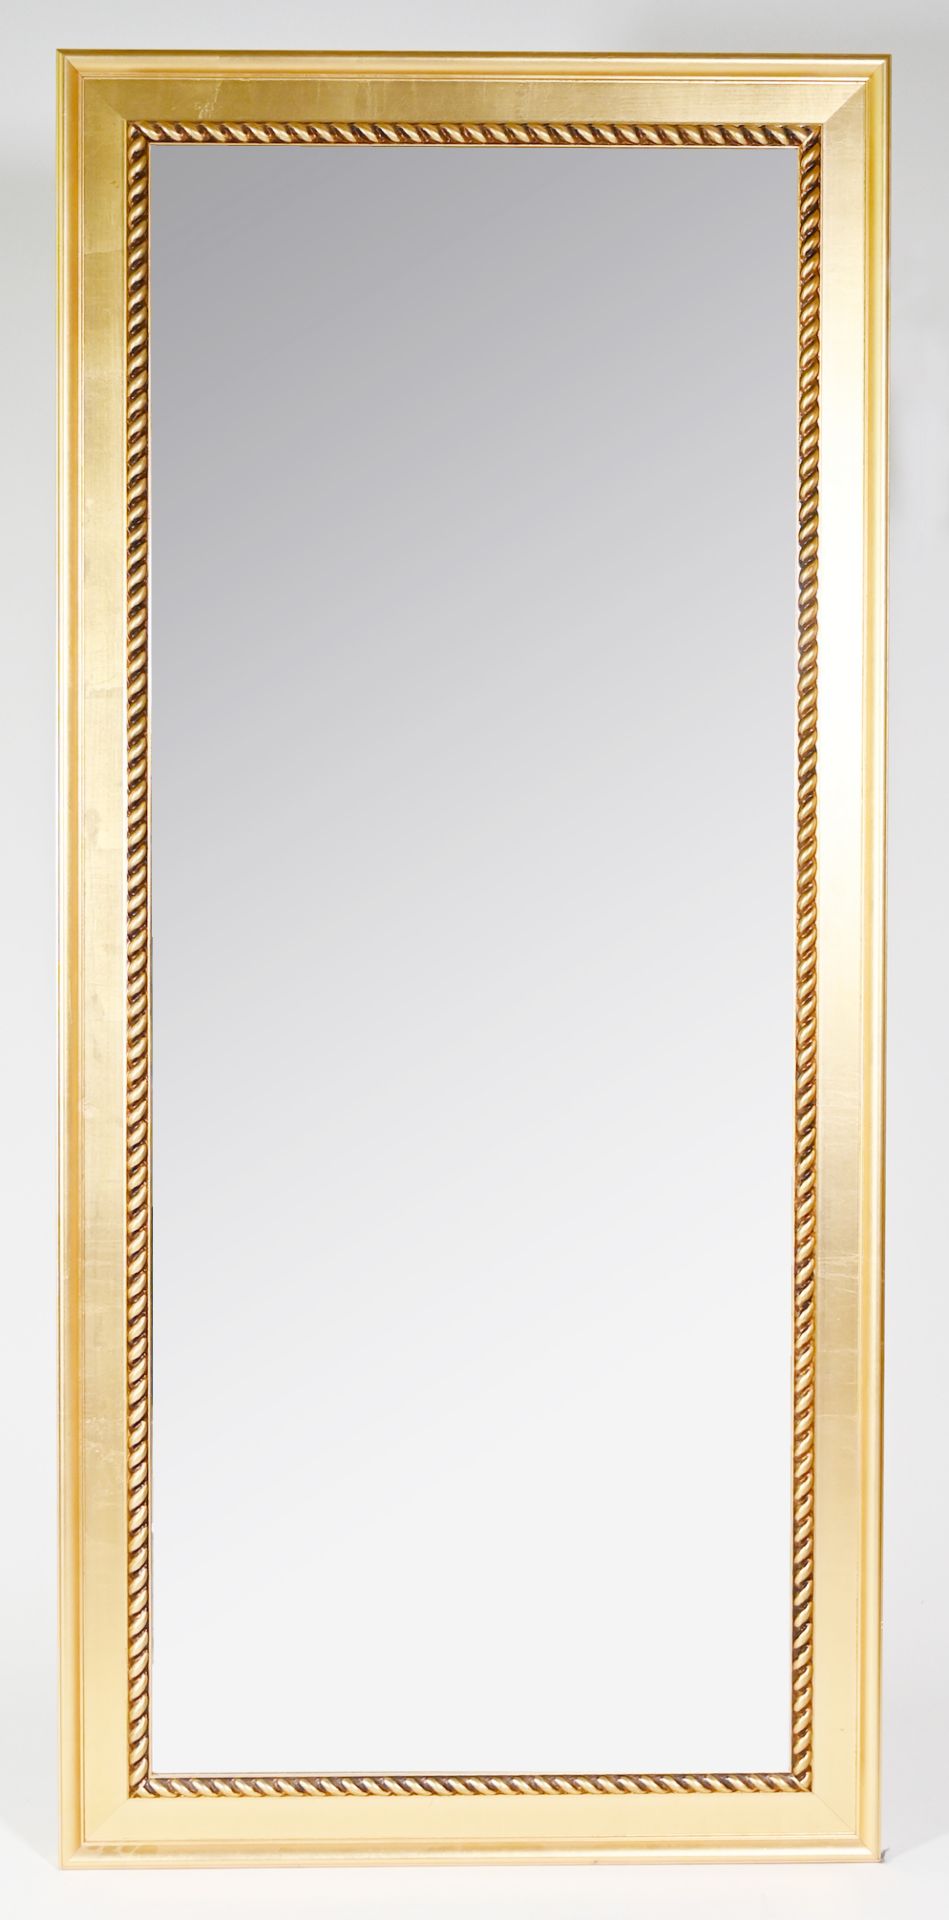 Spiegel in Holzrahmen, goldlackiert